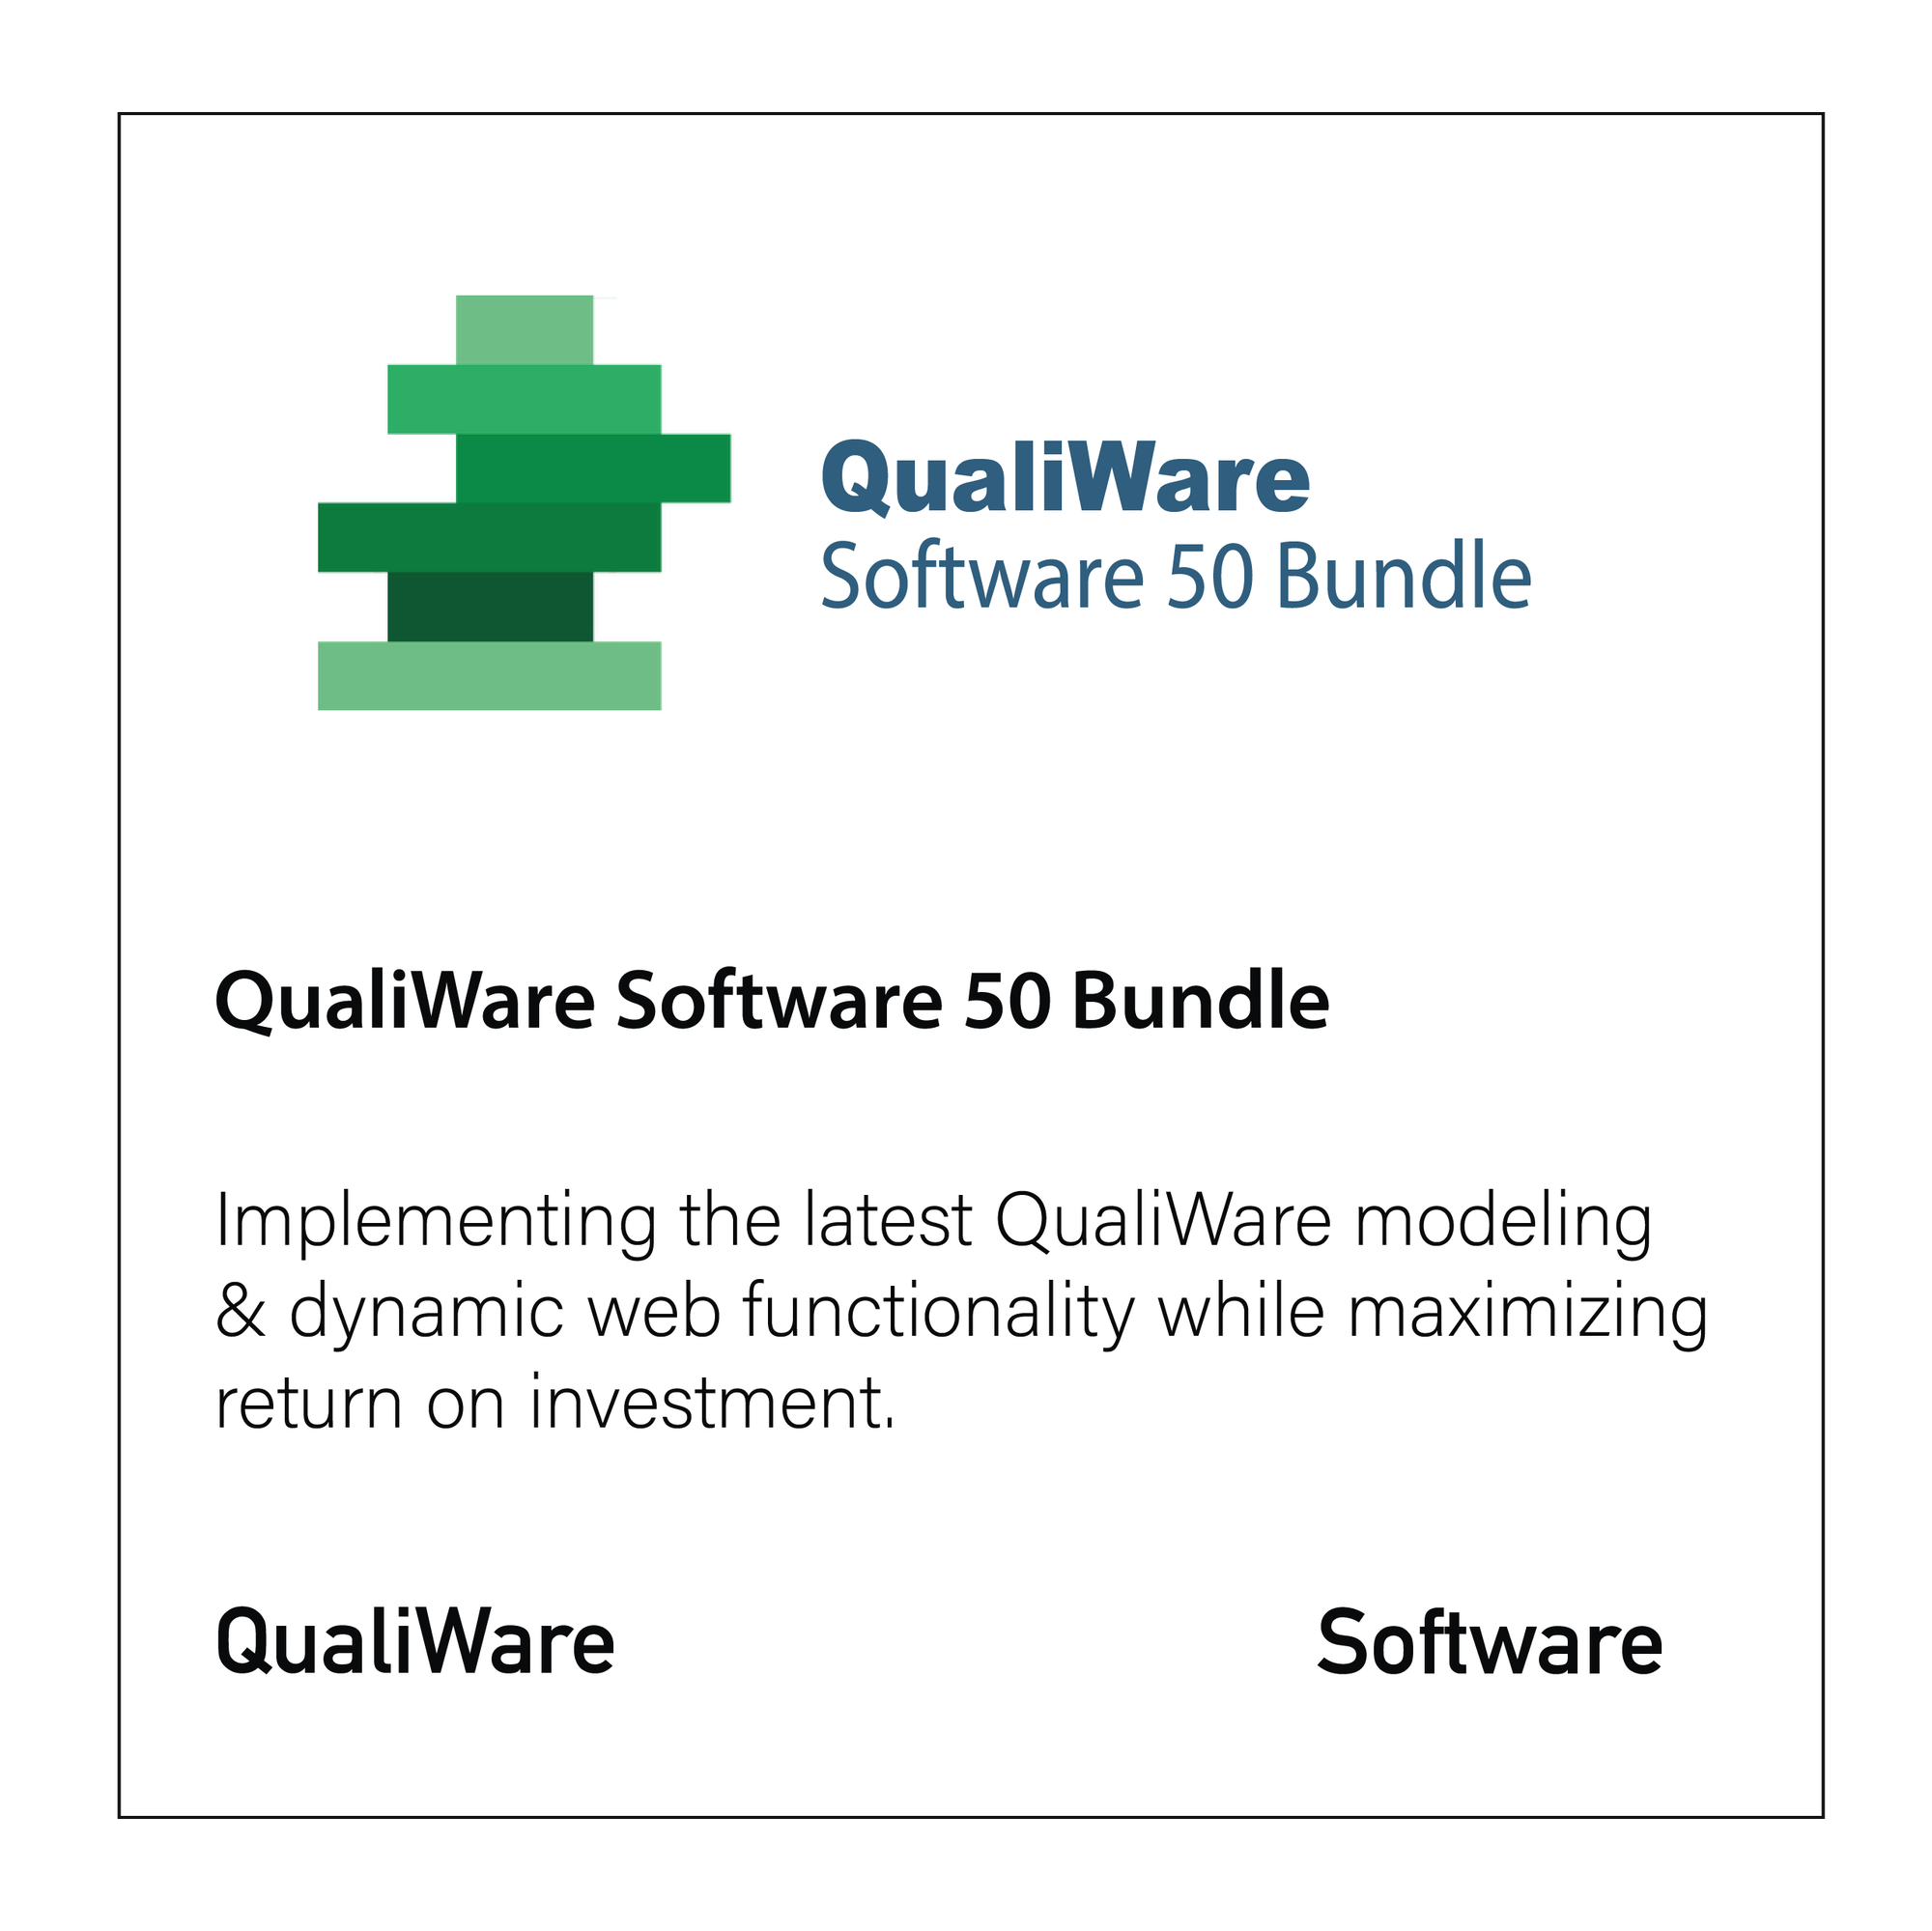 QualiWare Software 50 Bundle